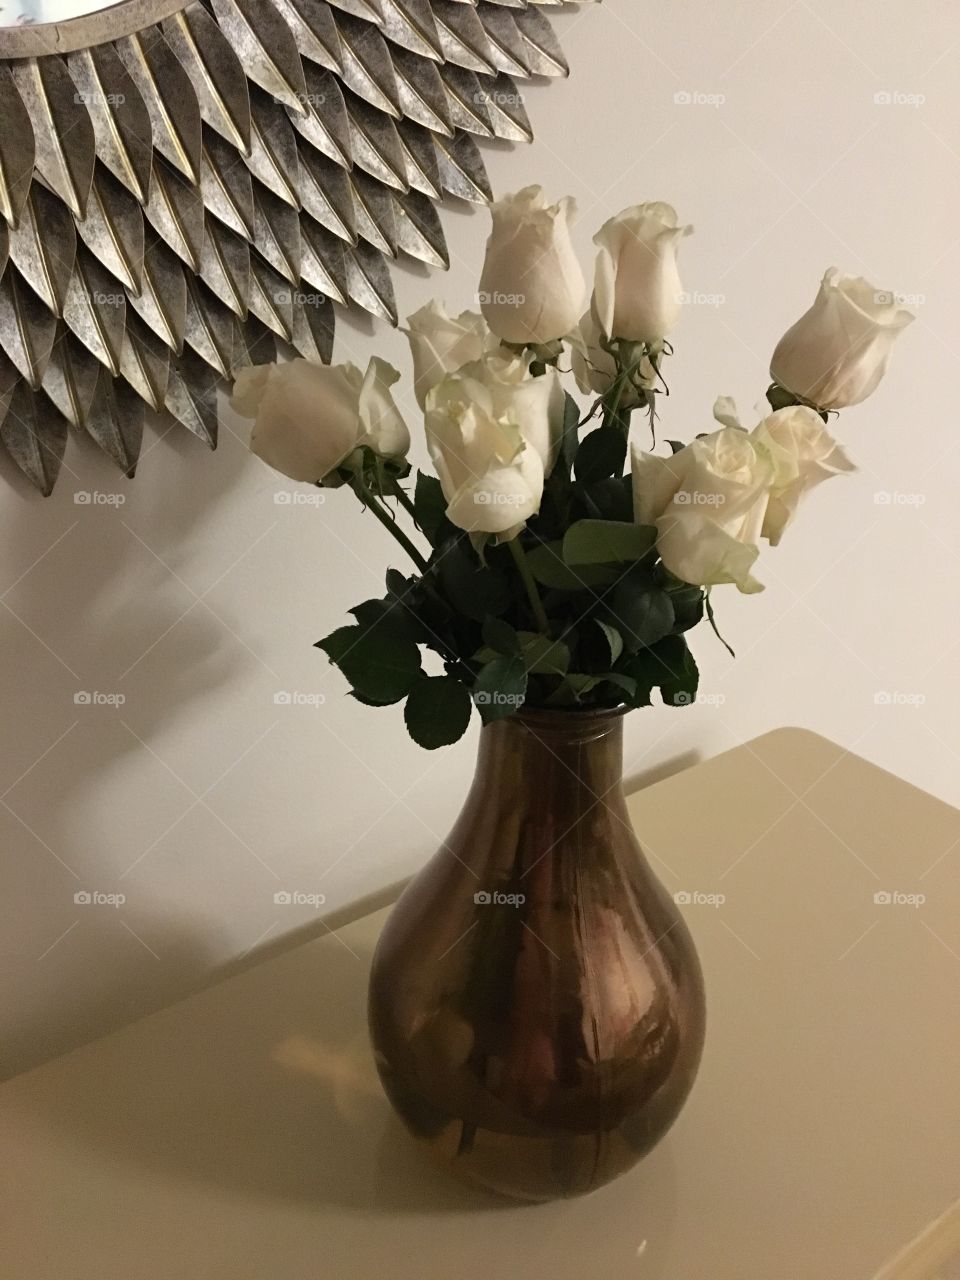 White roses in a vase